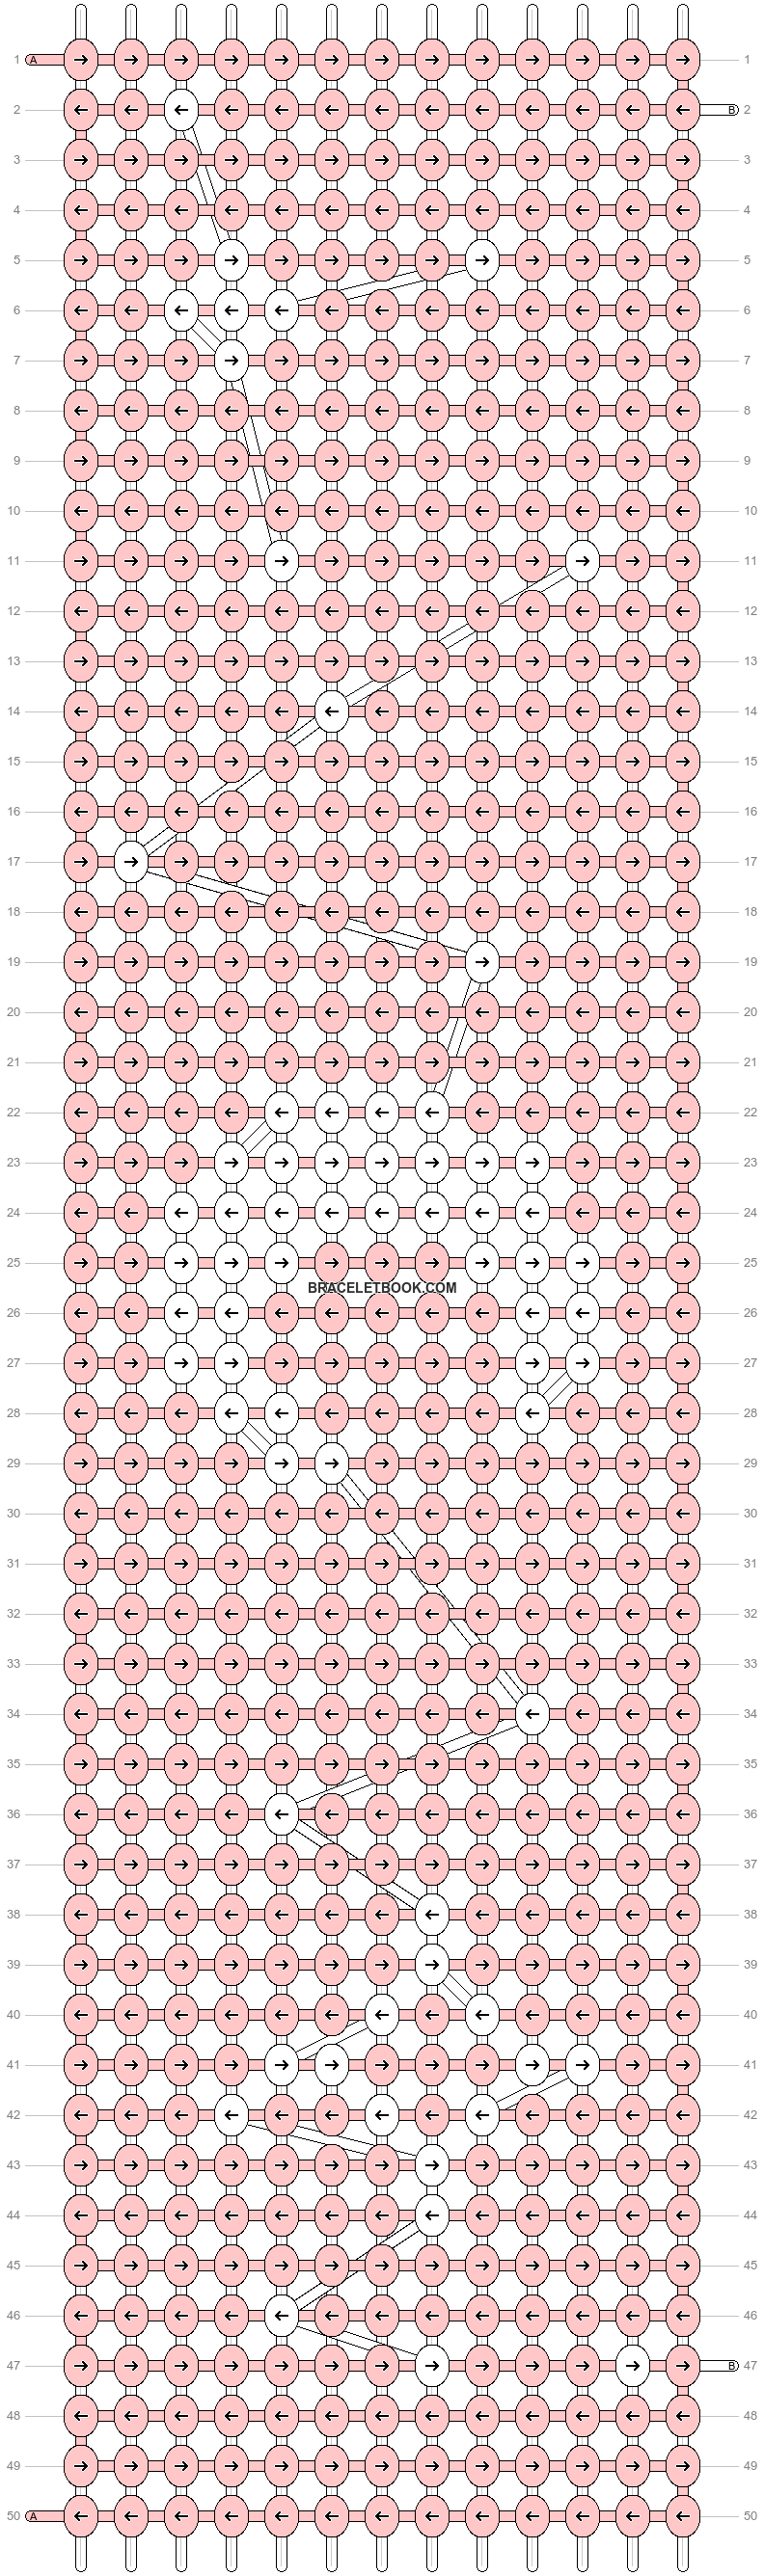 Alpha pattern #57316 variation #100084 pattern